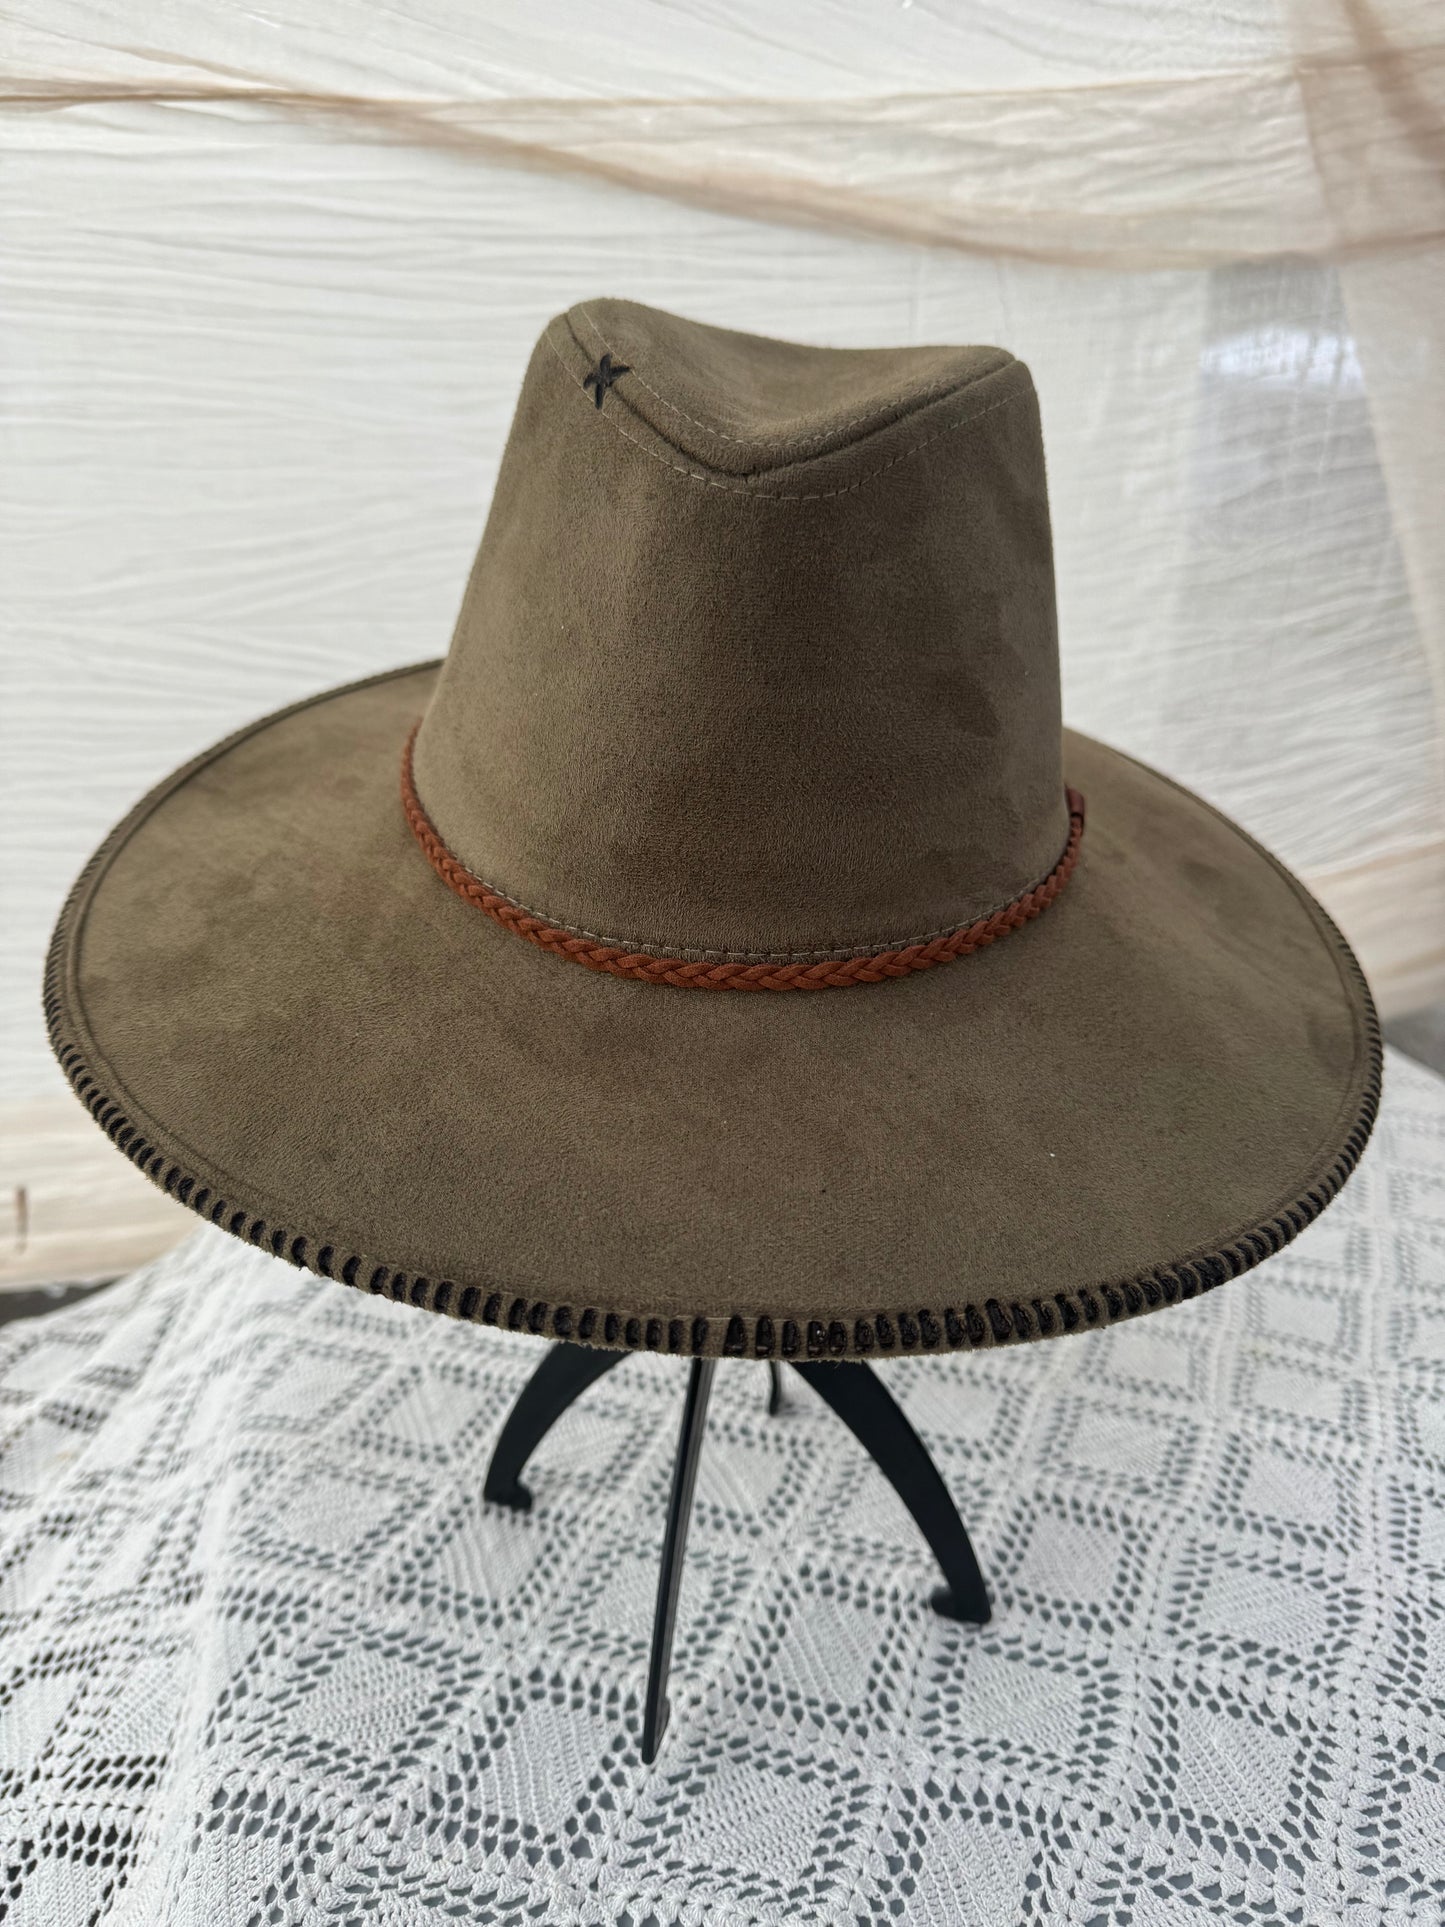 Light brown suede hat